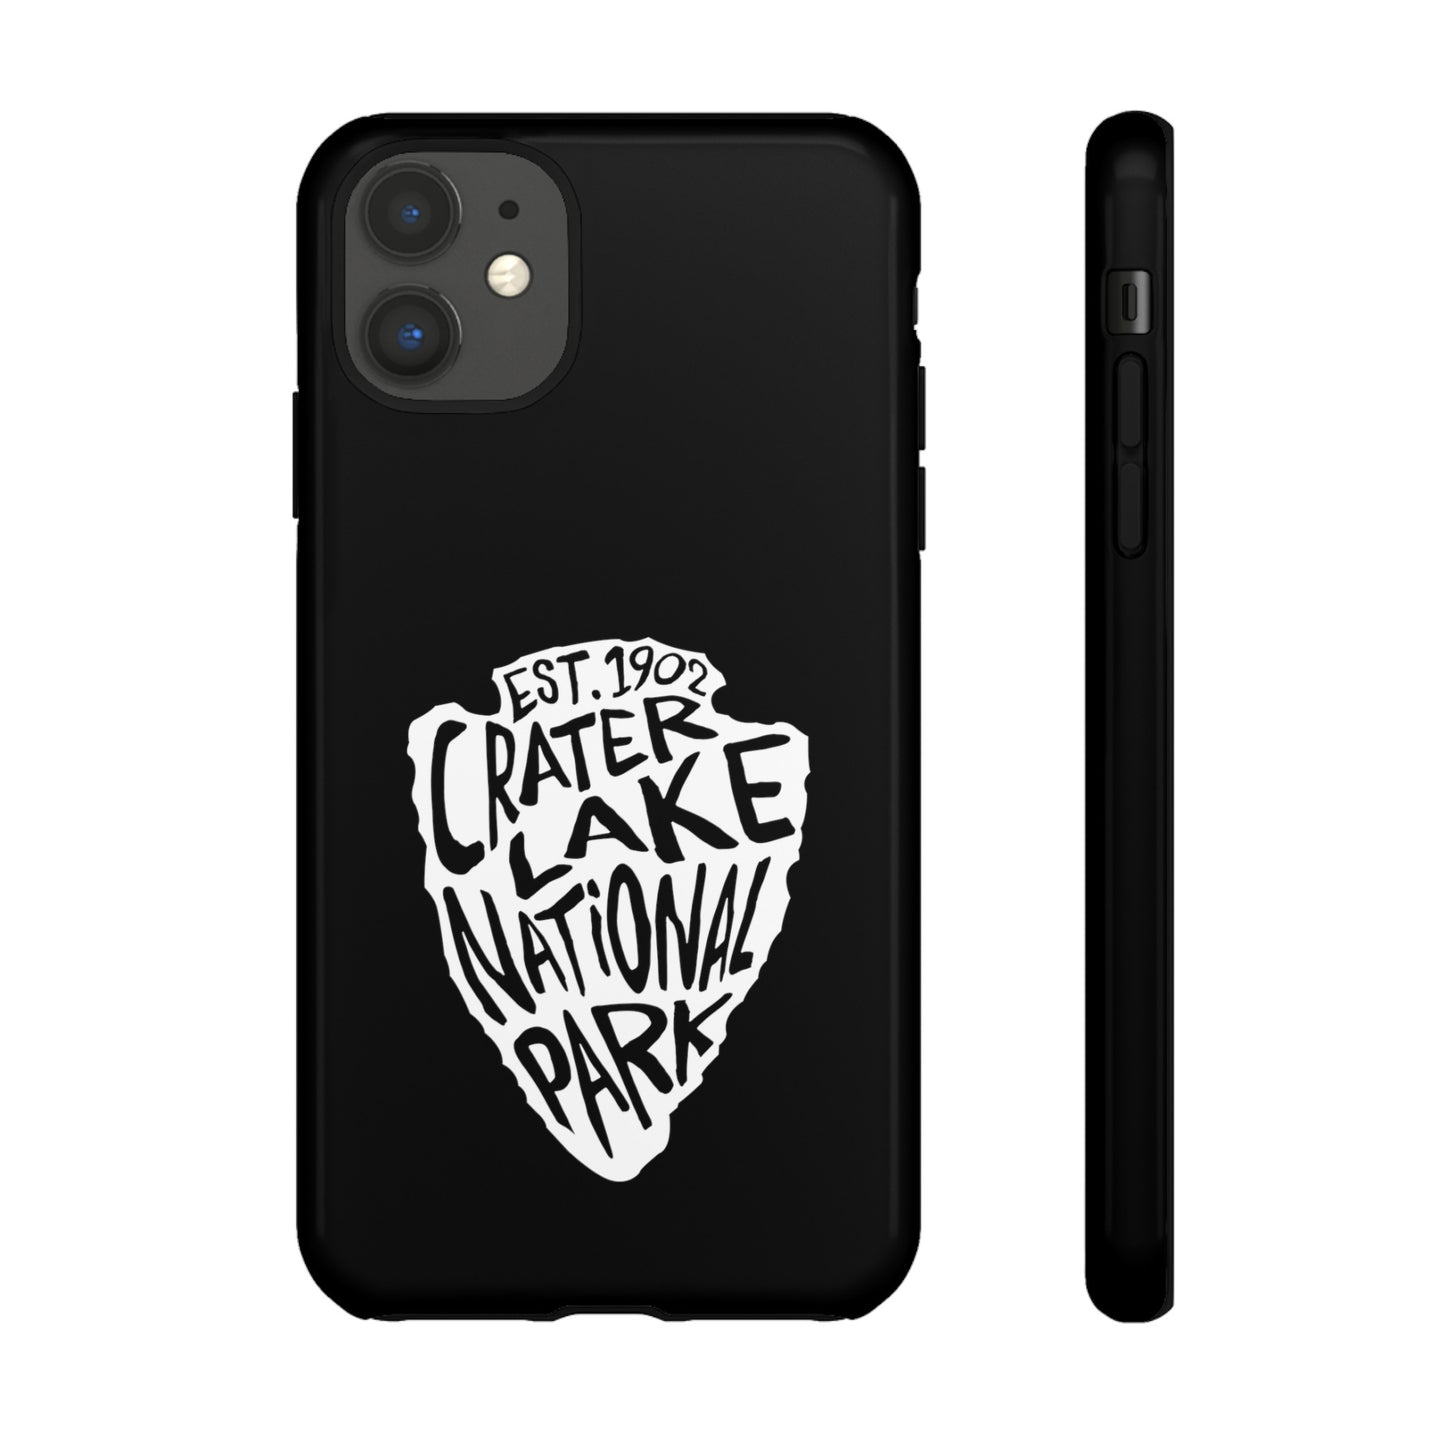 Crater Lake National Park Phone Case - Arrowhead Design